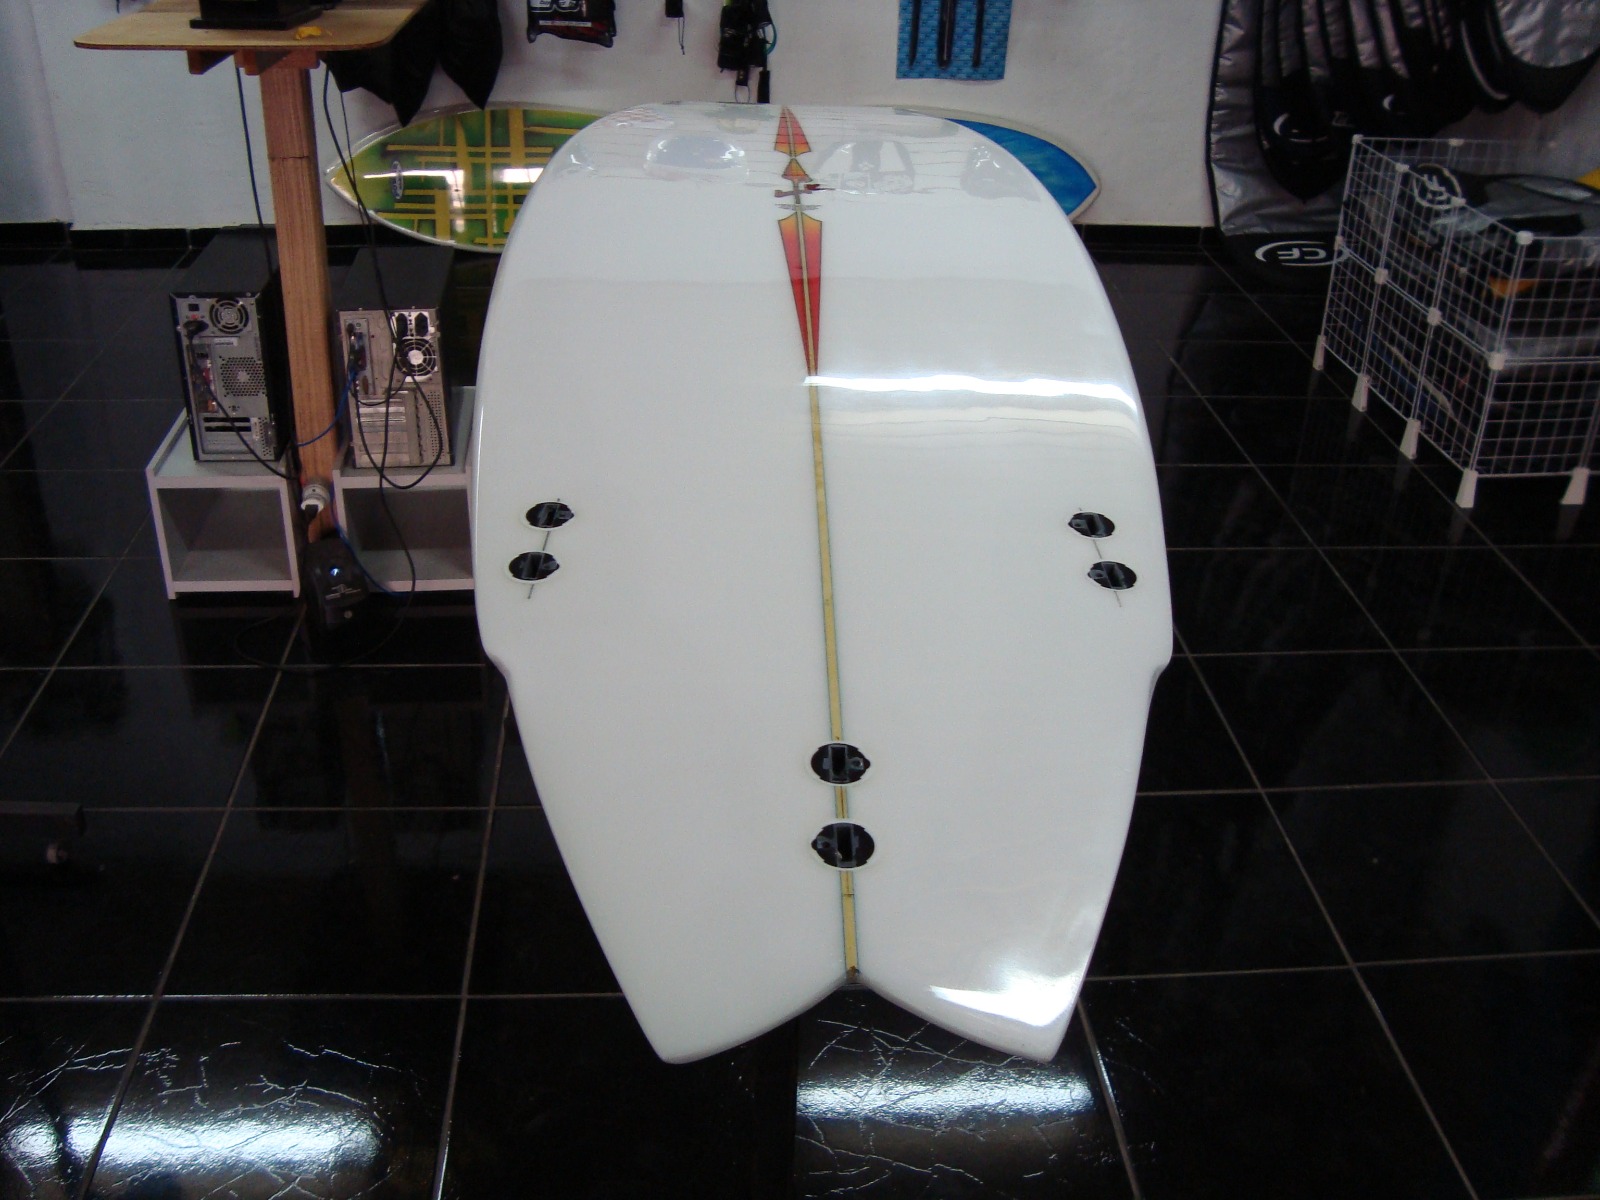 Kiko Surfboards, equipamento forjado no passado com vistas ao futuro.